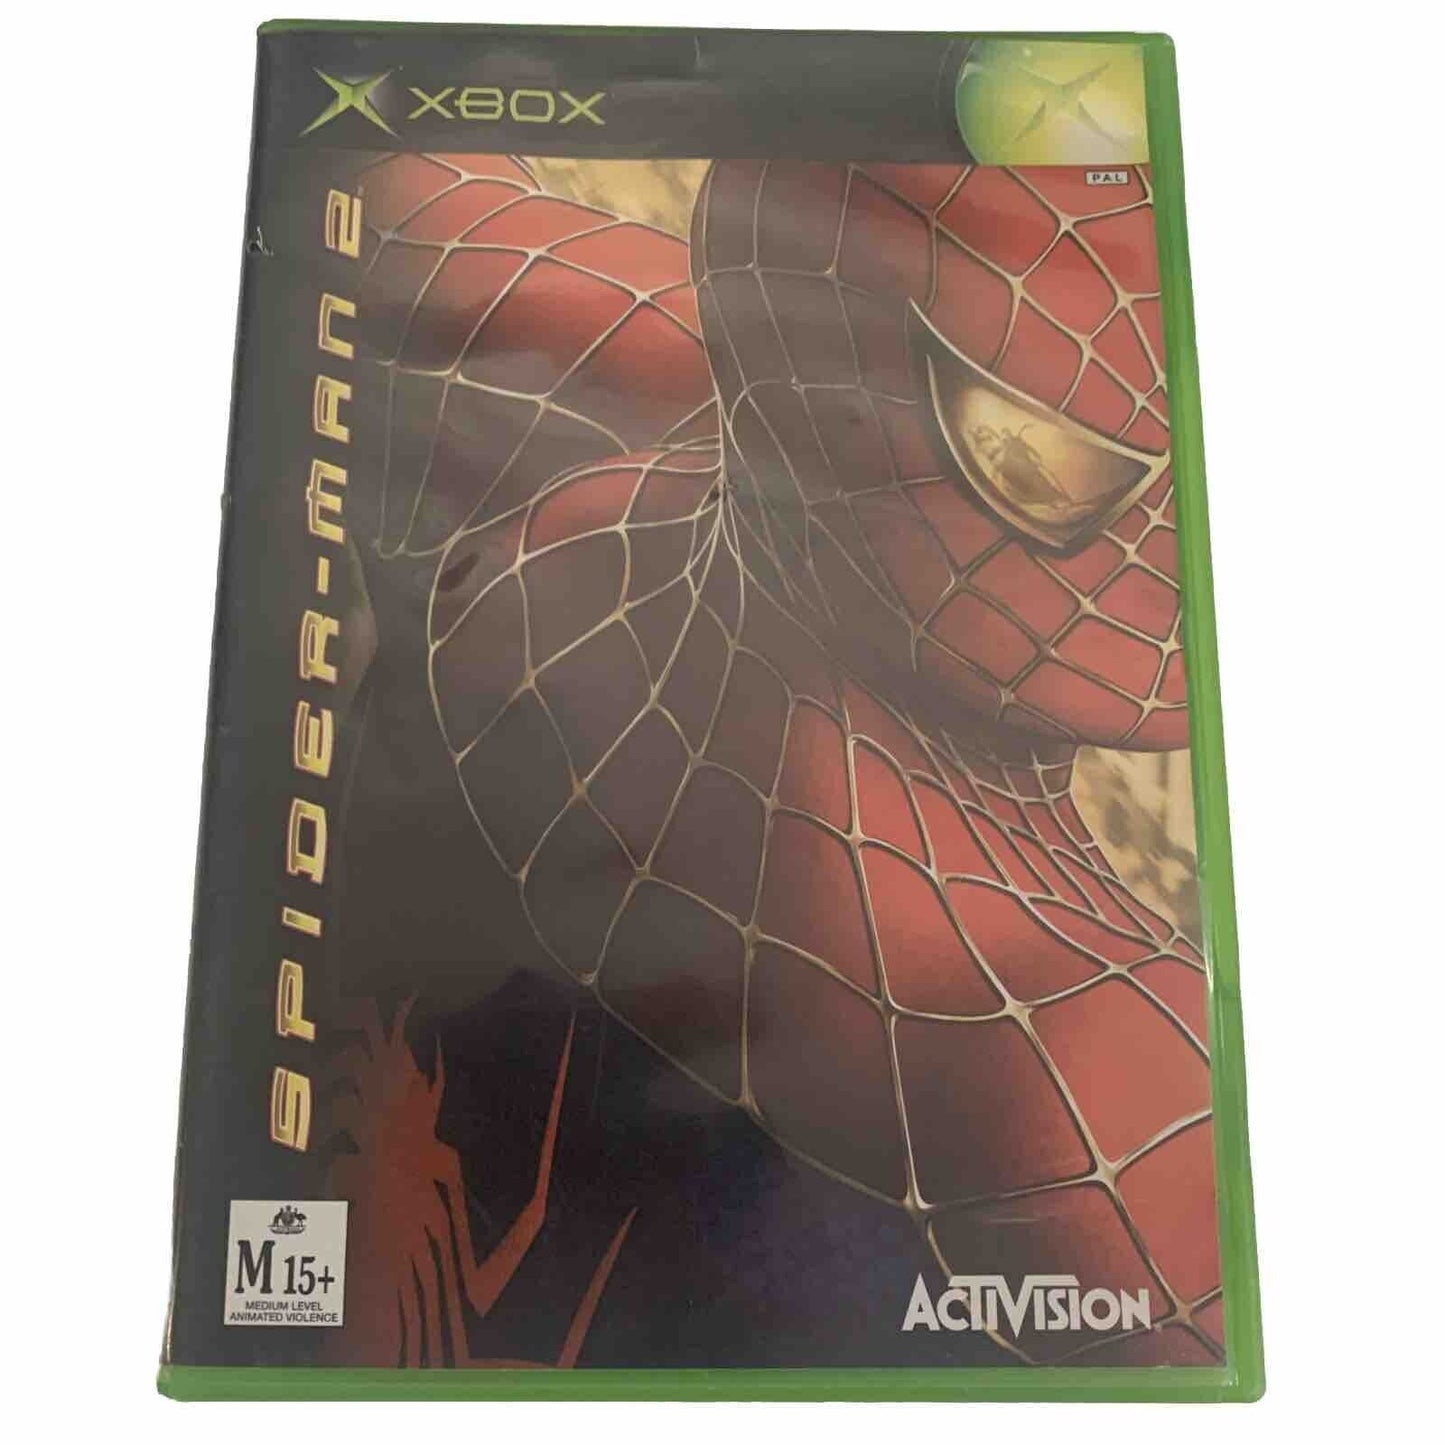 Spider-Man 2 Xbox Original Game